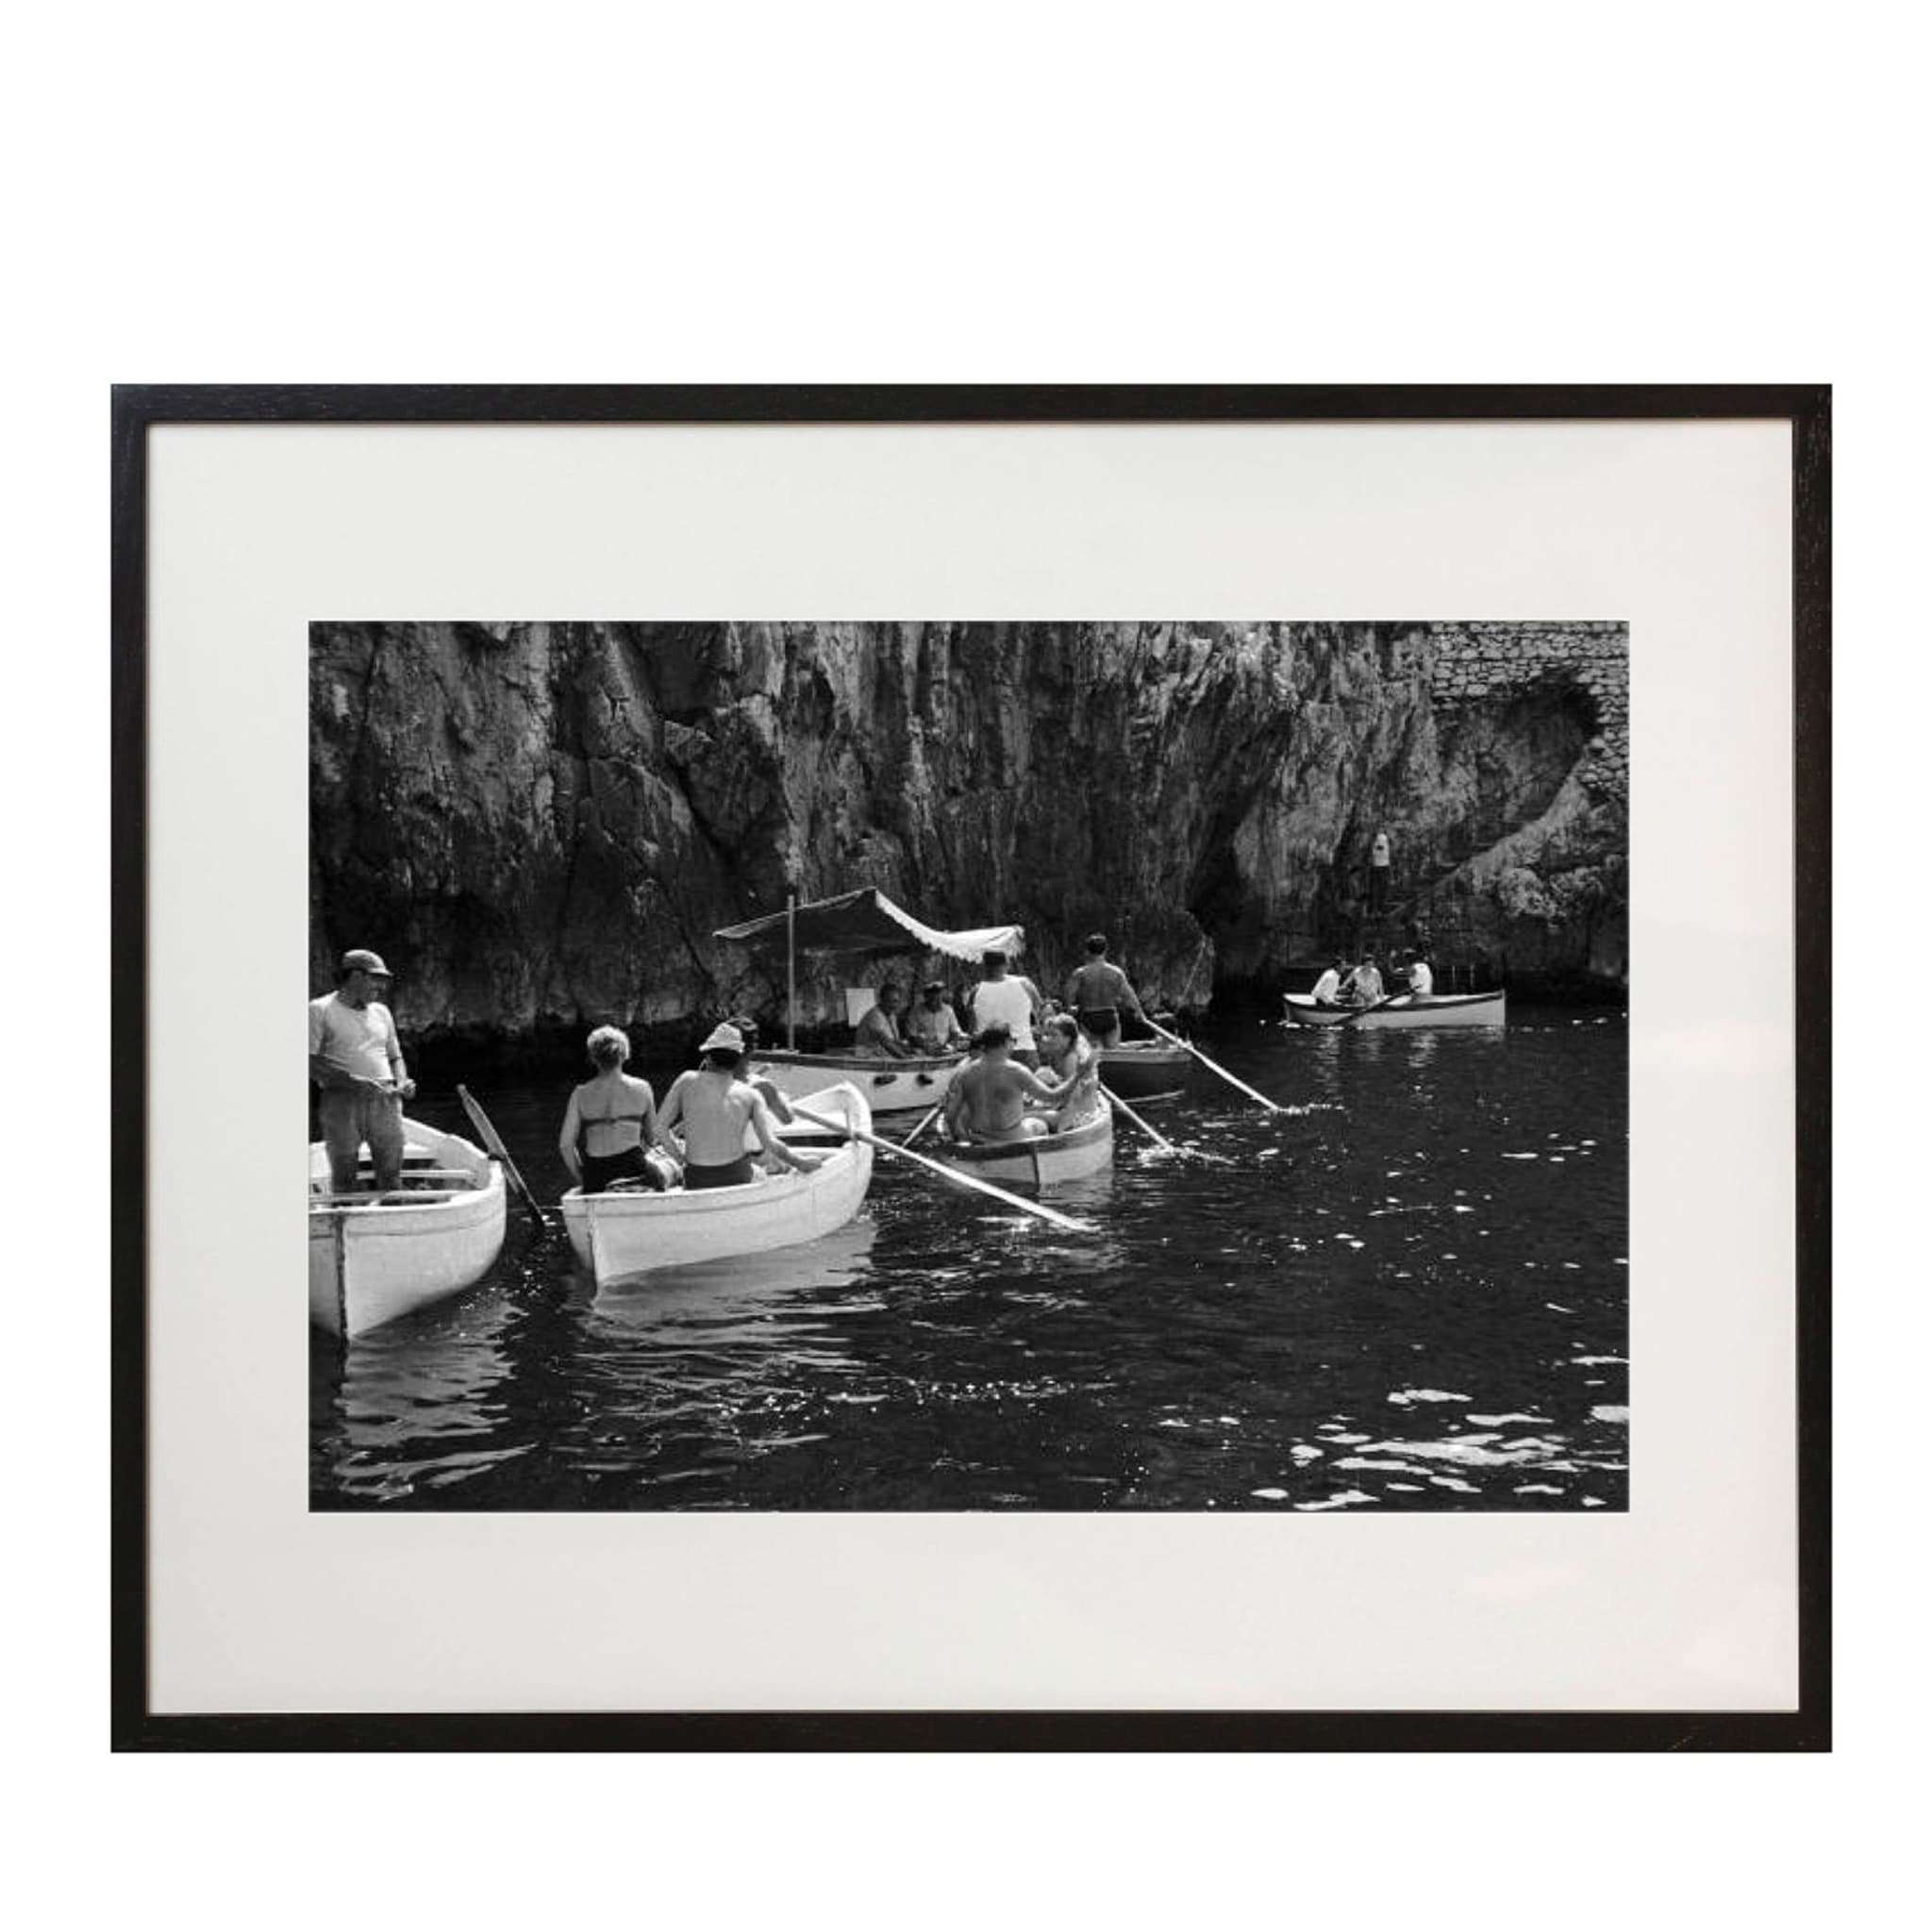 Boat Queue Framed Print by Nocella - Main view